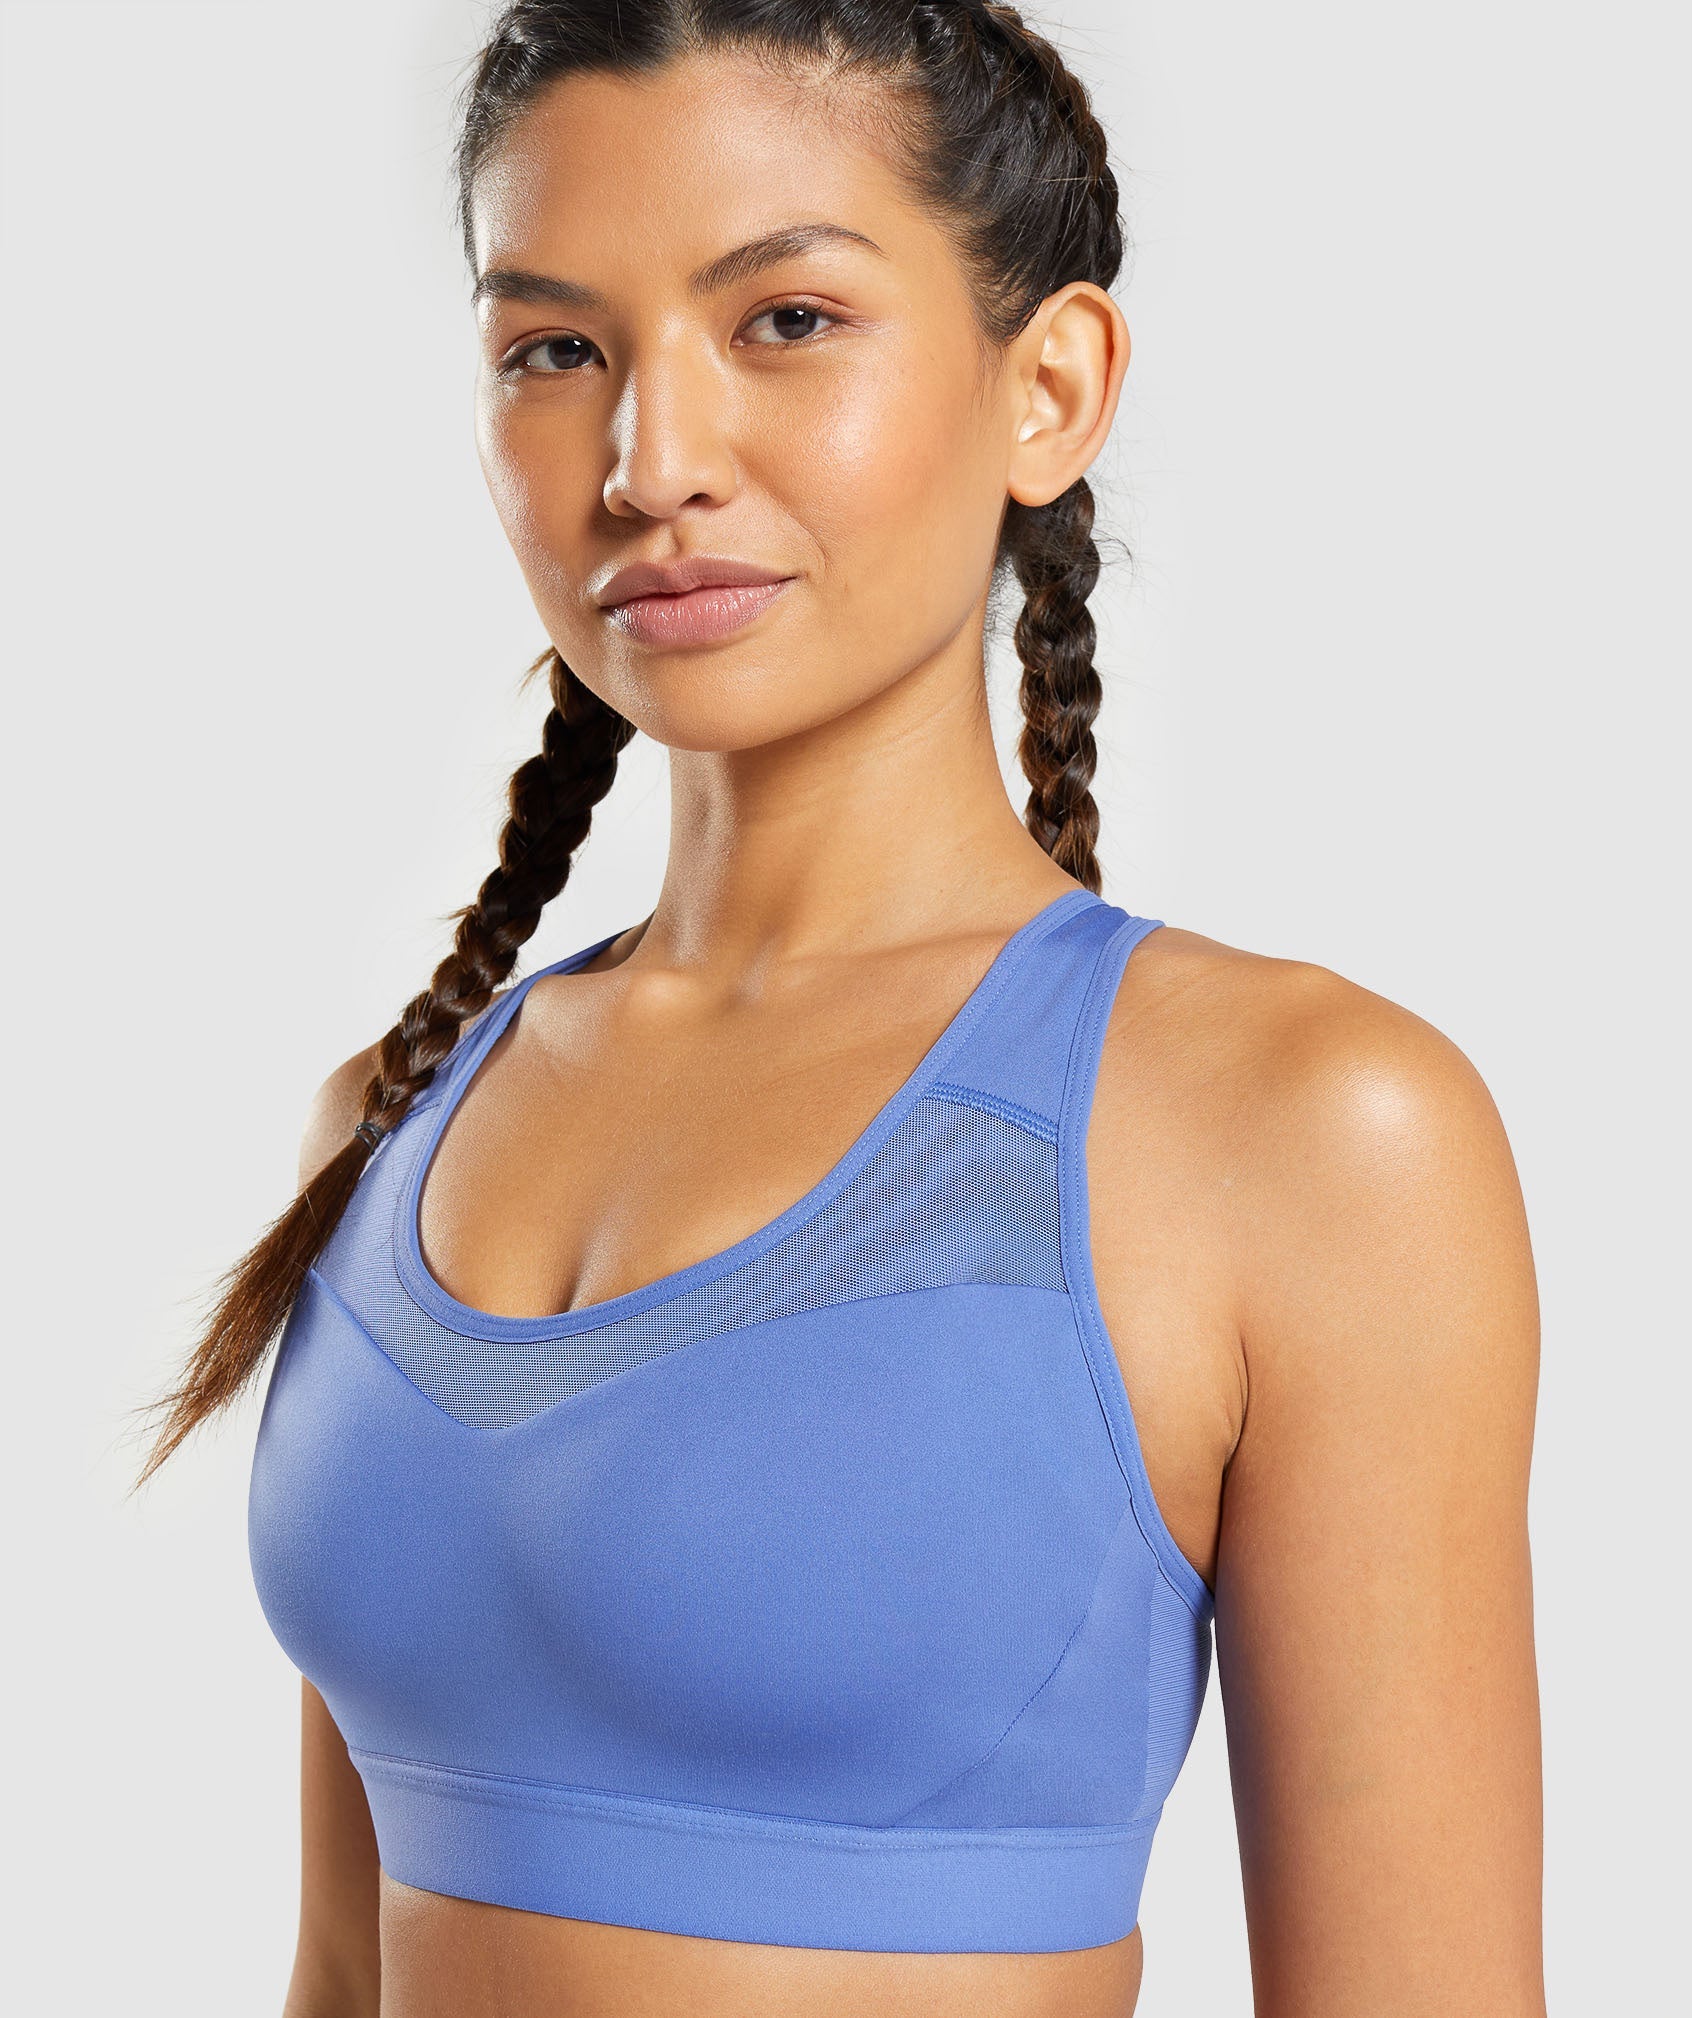 Gymshark Flex Sports Bra Blue - $10 (64% Off Retail) - From Julia